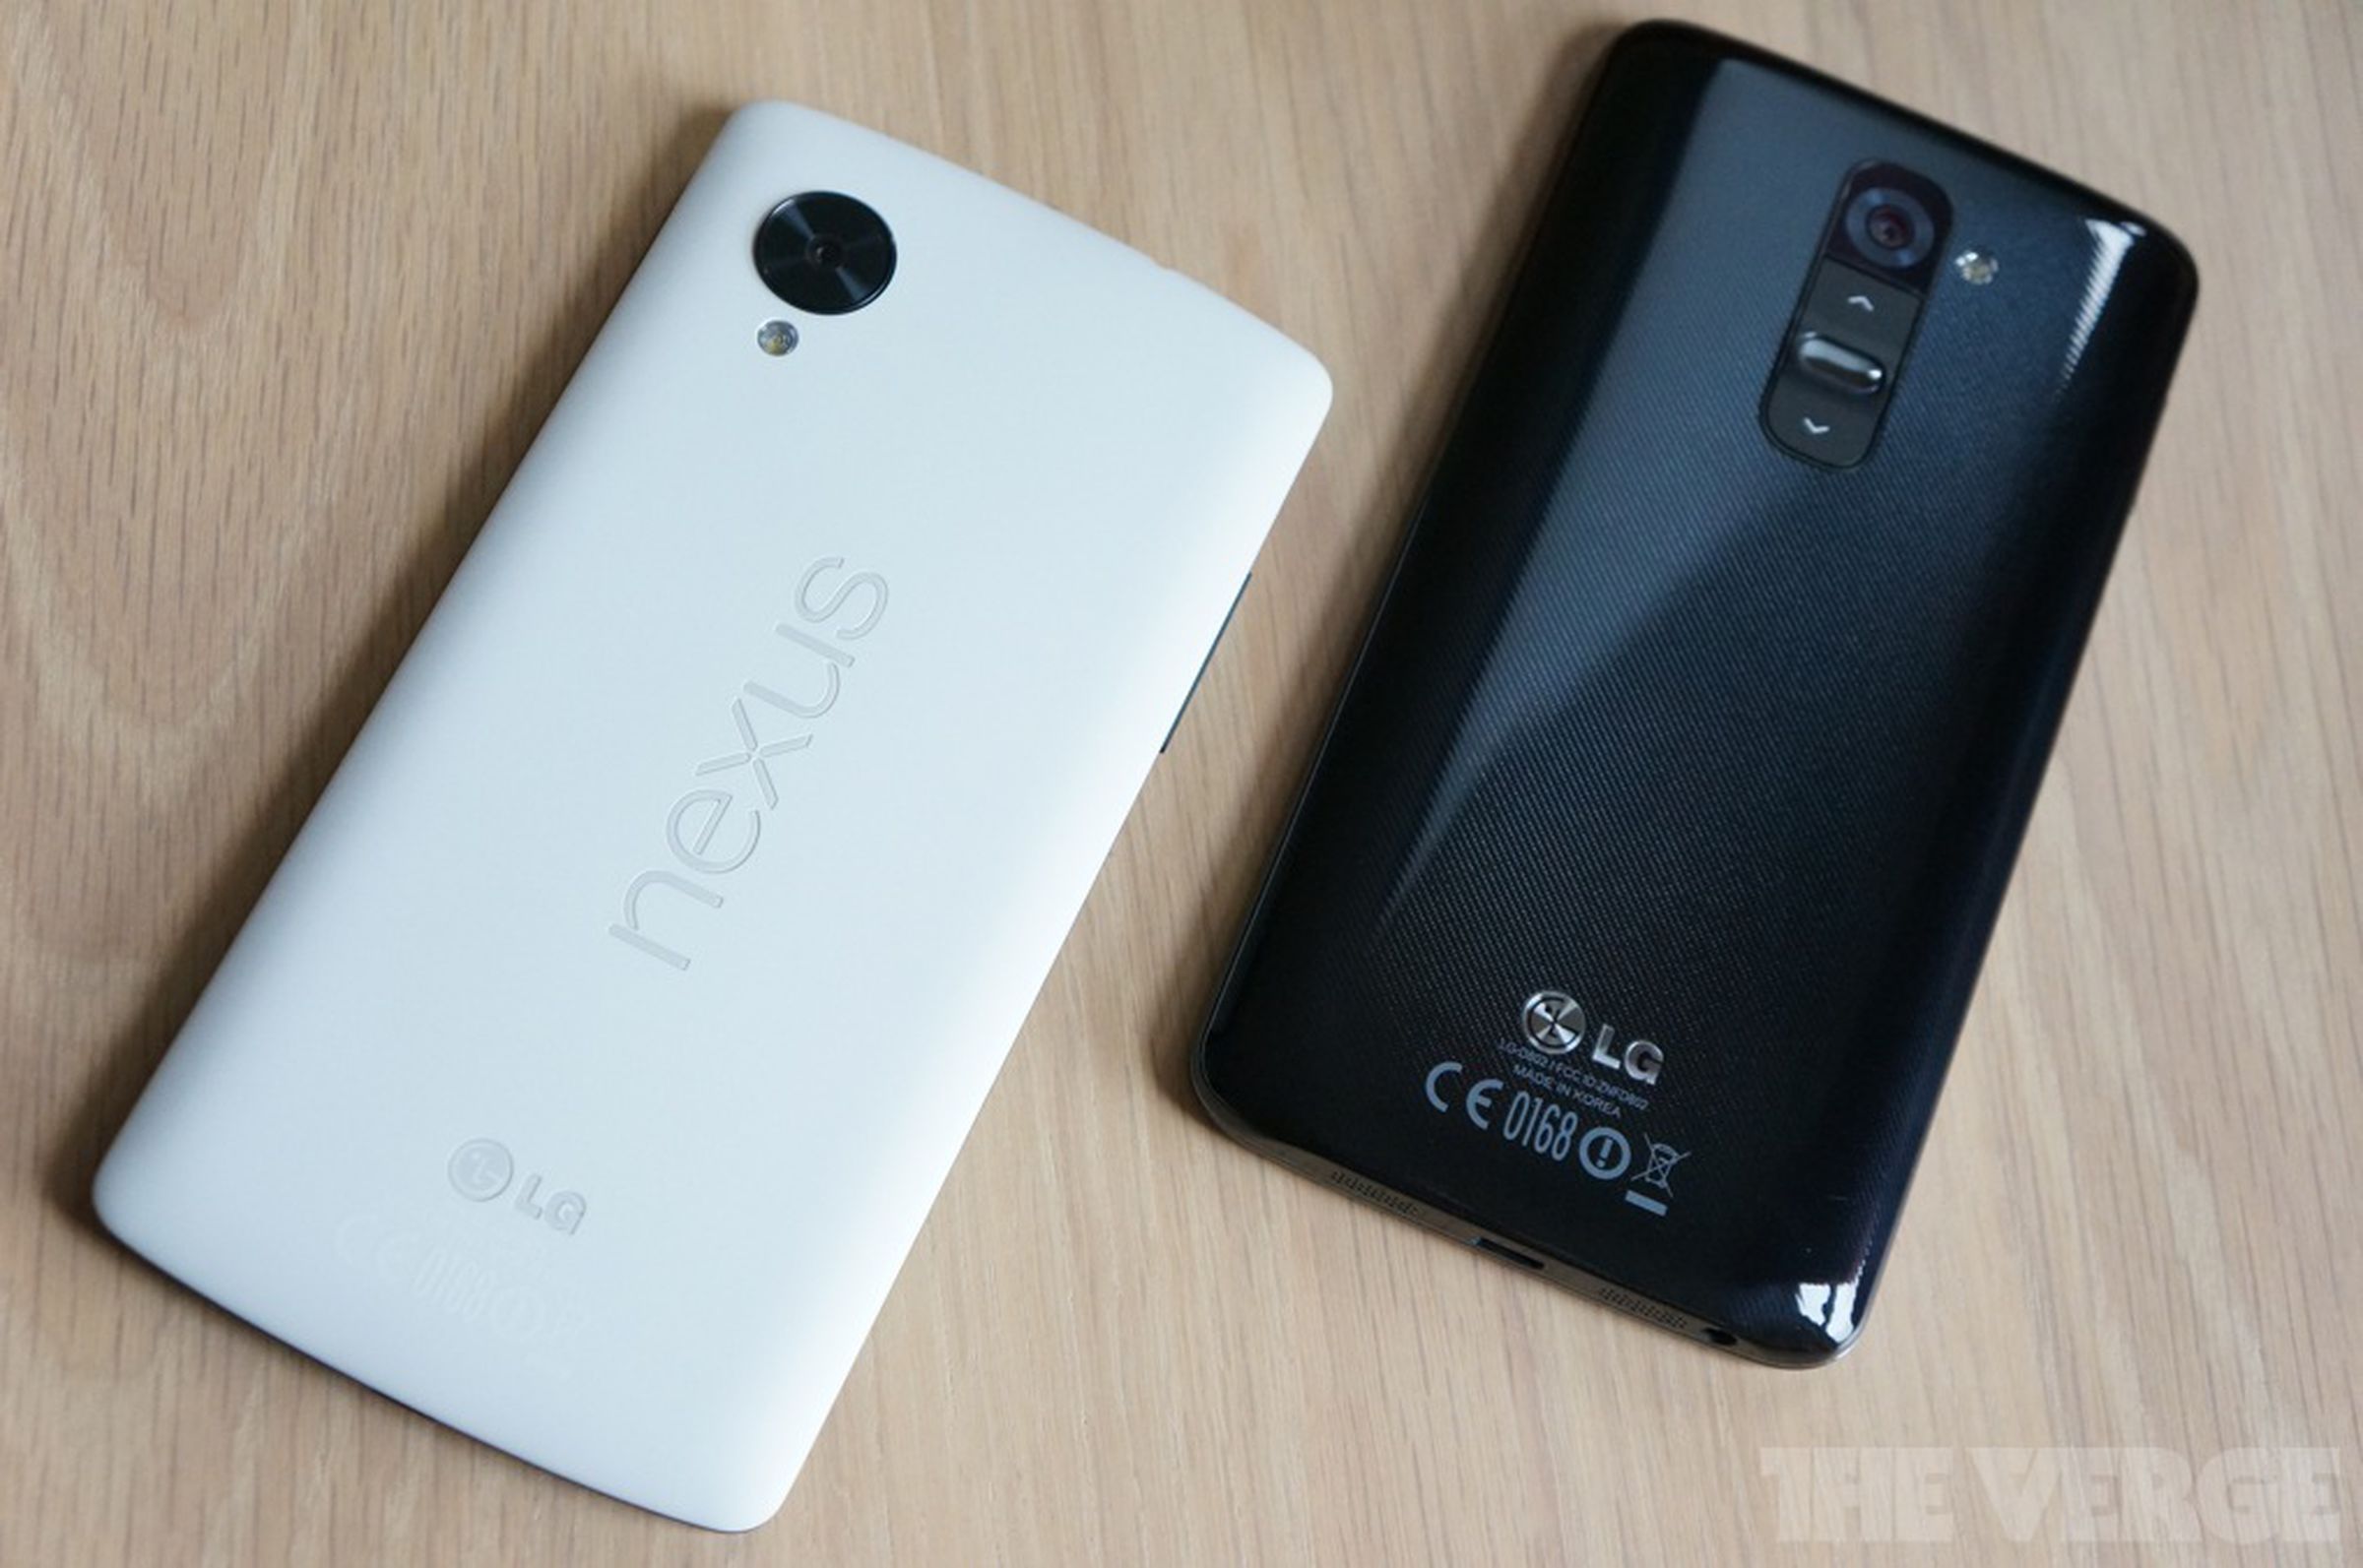 Nexus 5 vs. LG G2 photos